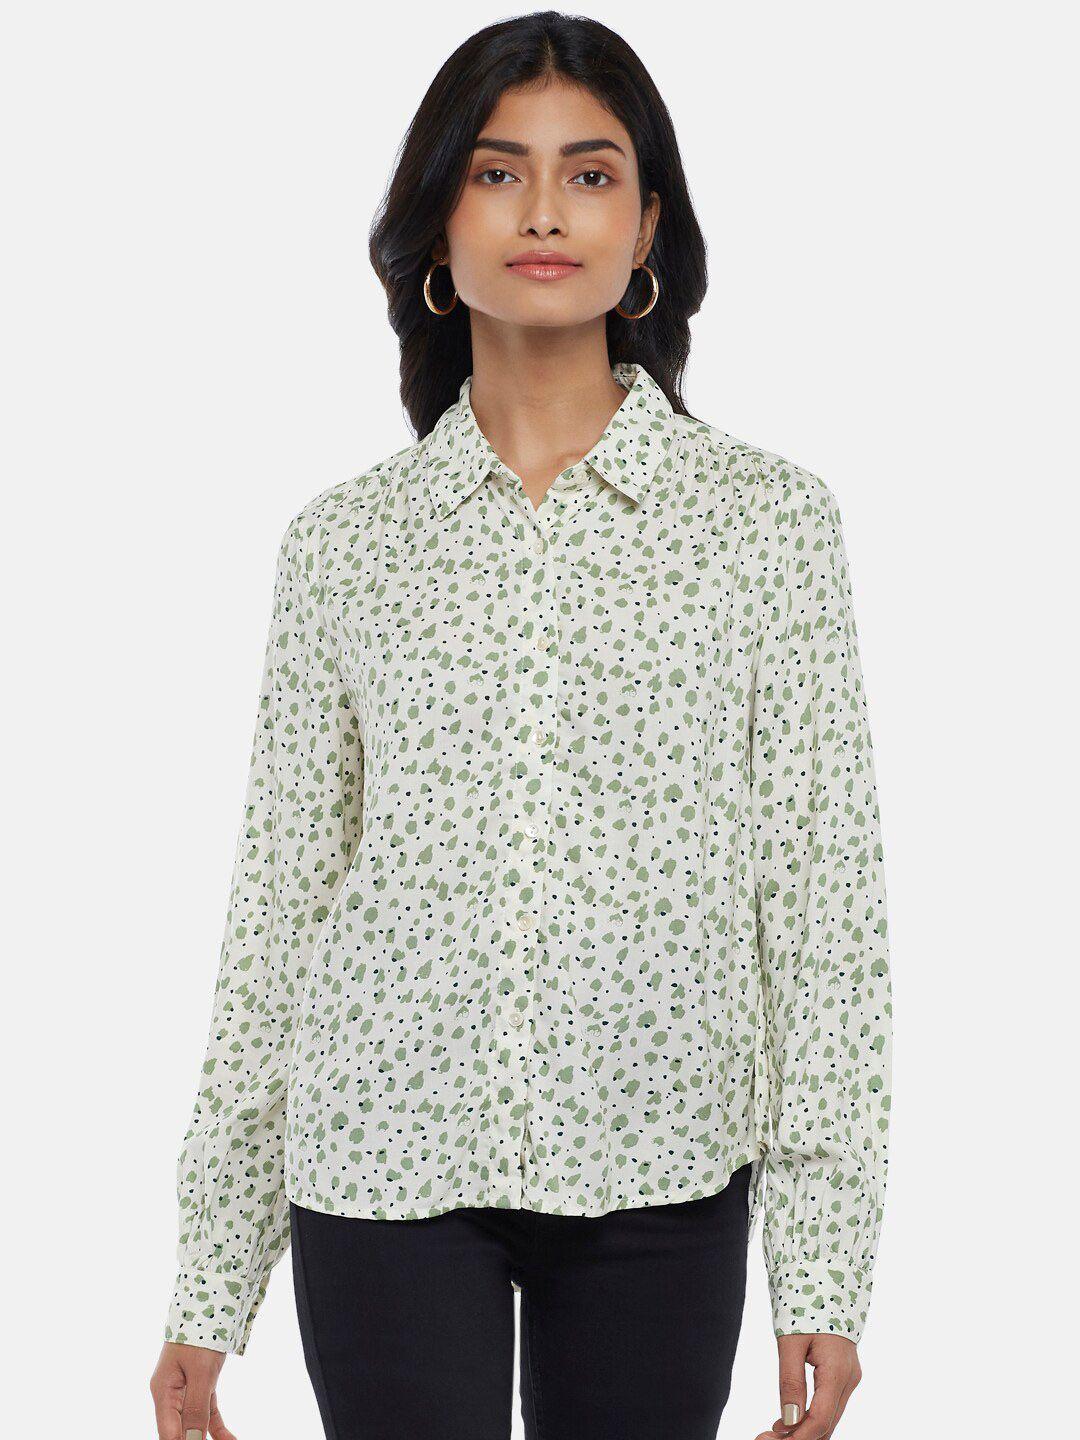 honey by pantaloons women green floral printed casual shirt